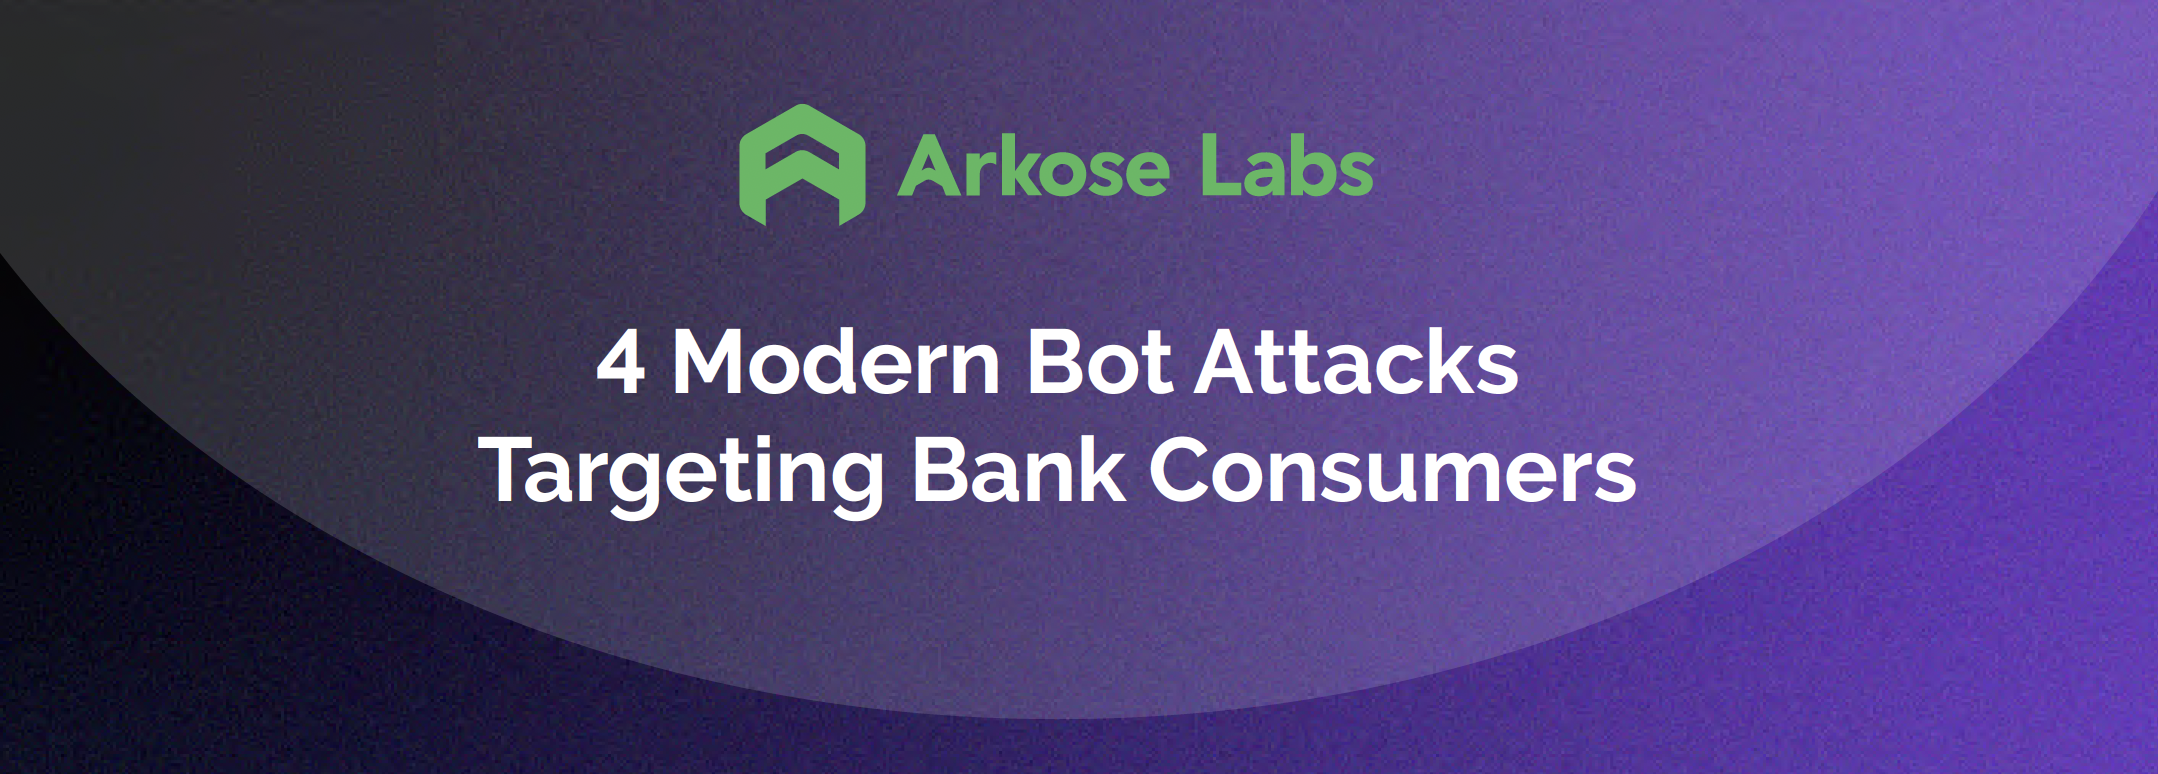 4 Modern Bot Attacks Targeting Bank Consumers